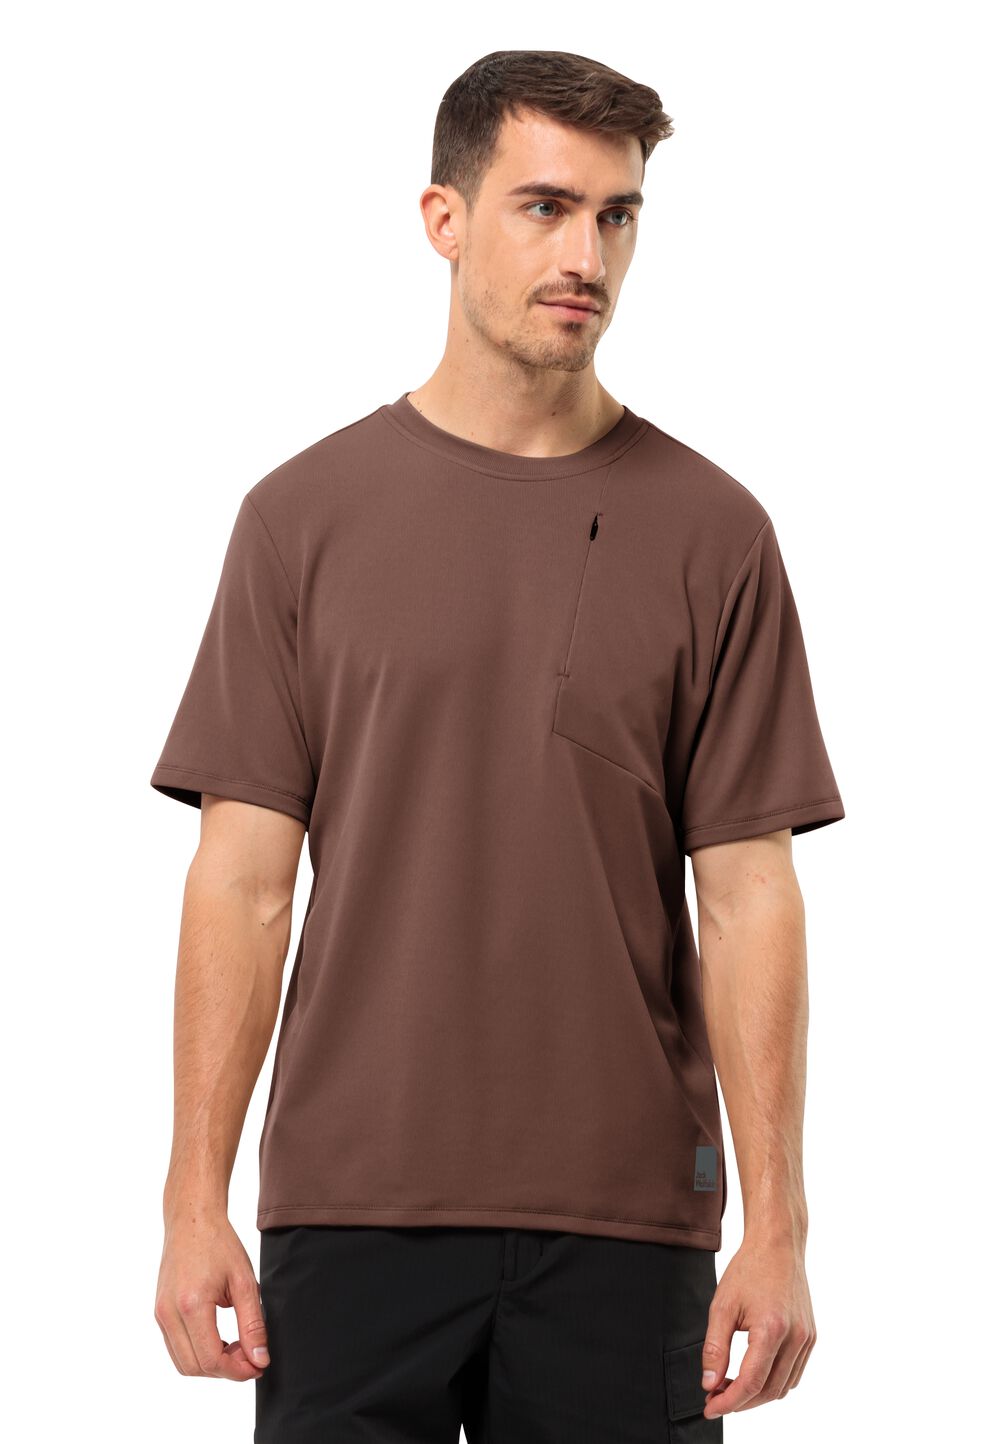 Jack Wolfskin Bike Commute T-Shirt Men Functioneel shirt Heren L bruin dark rust